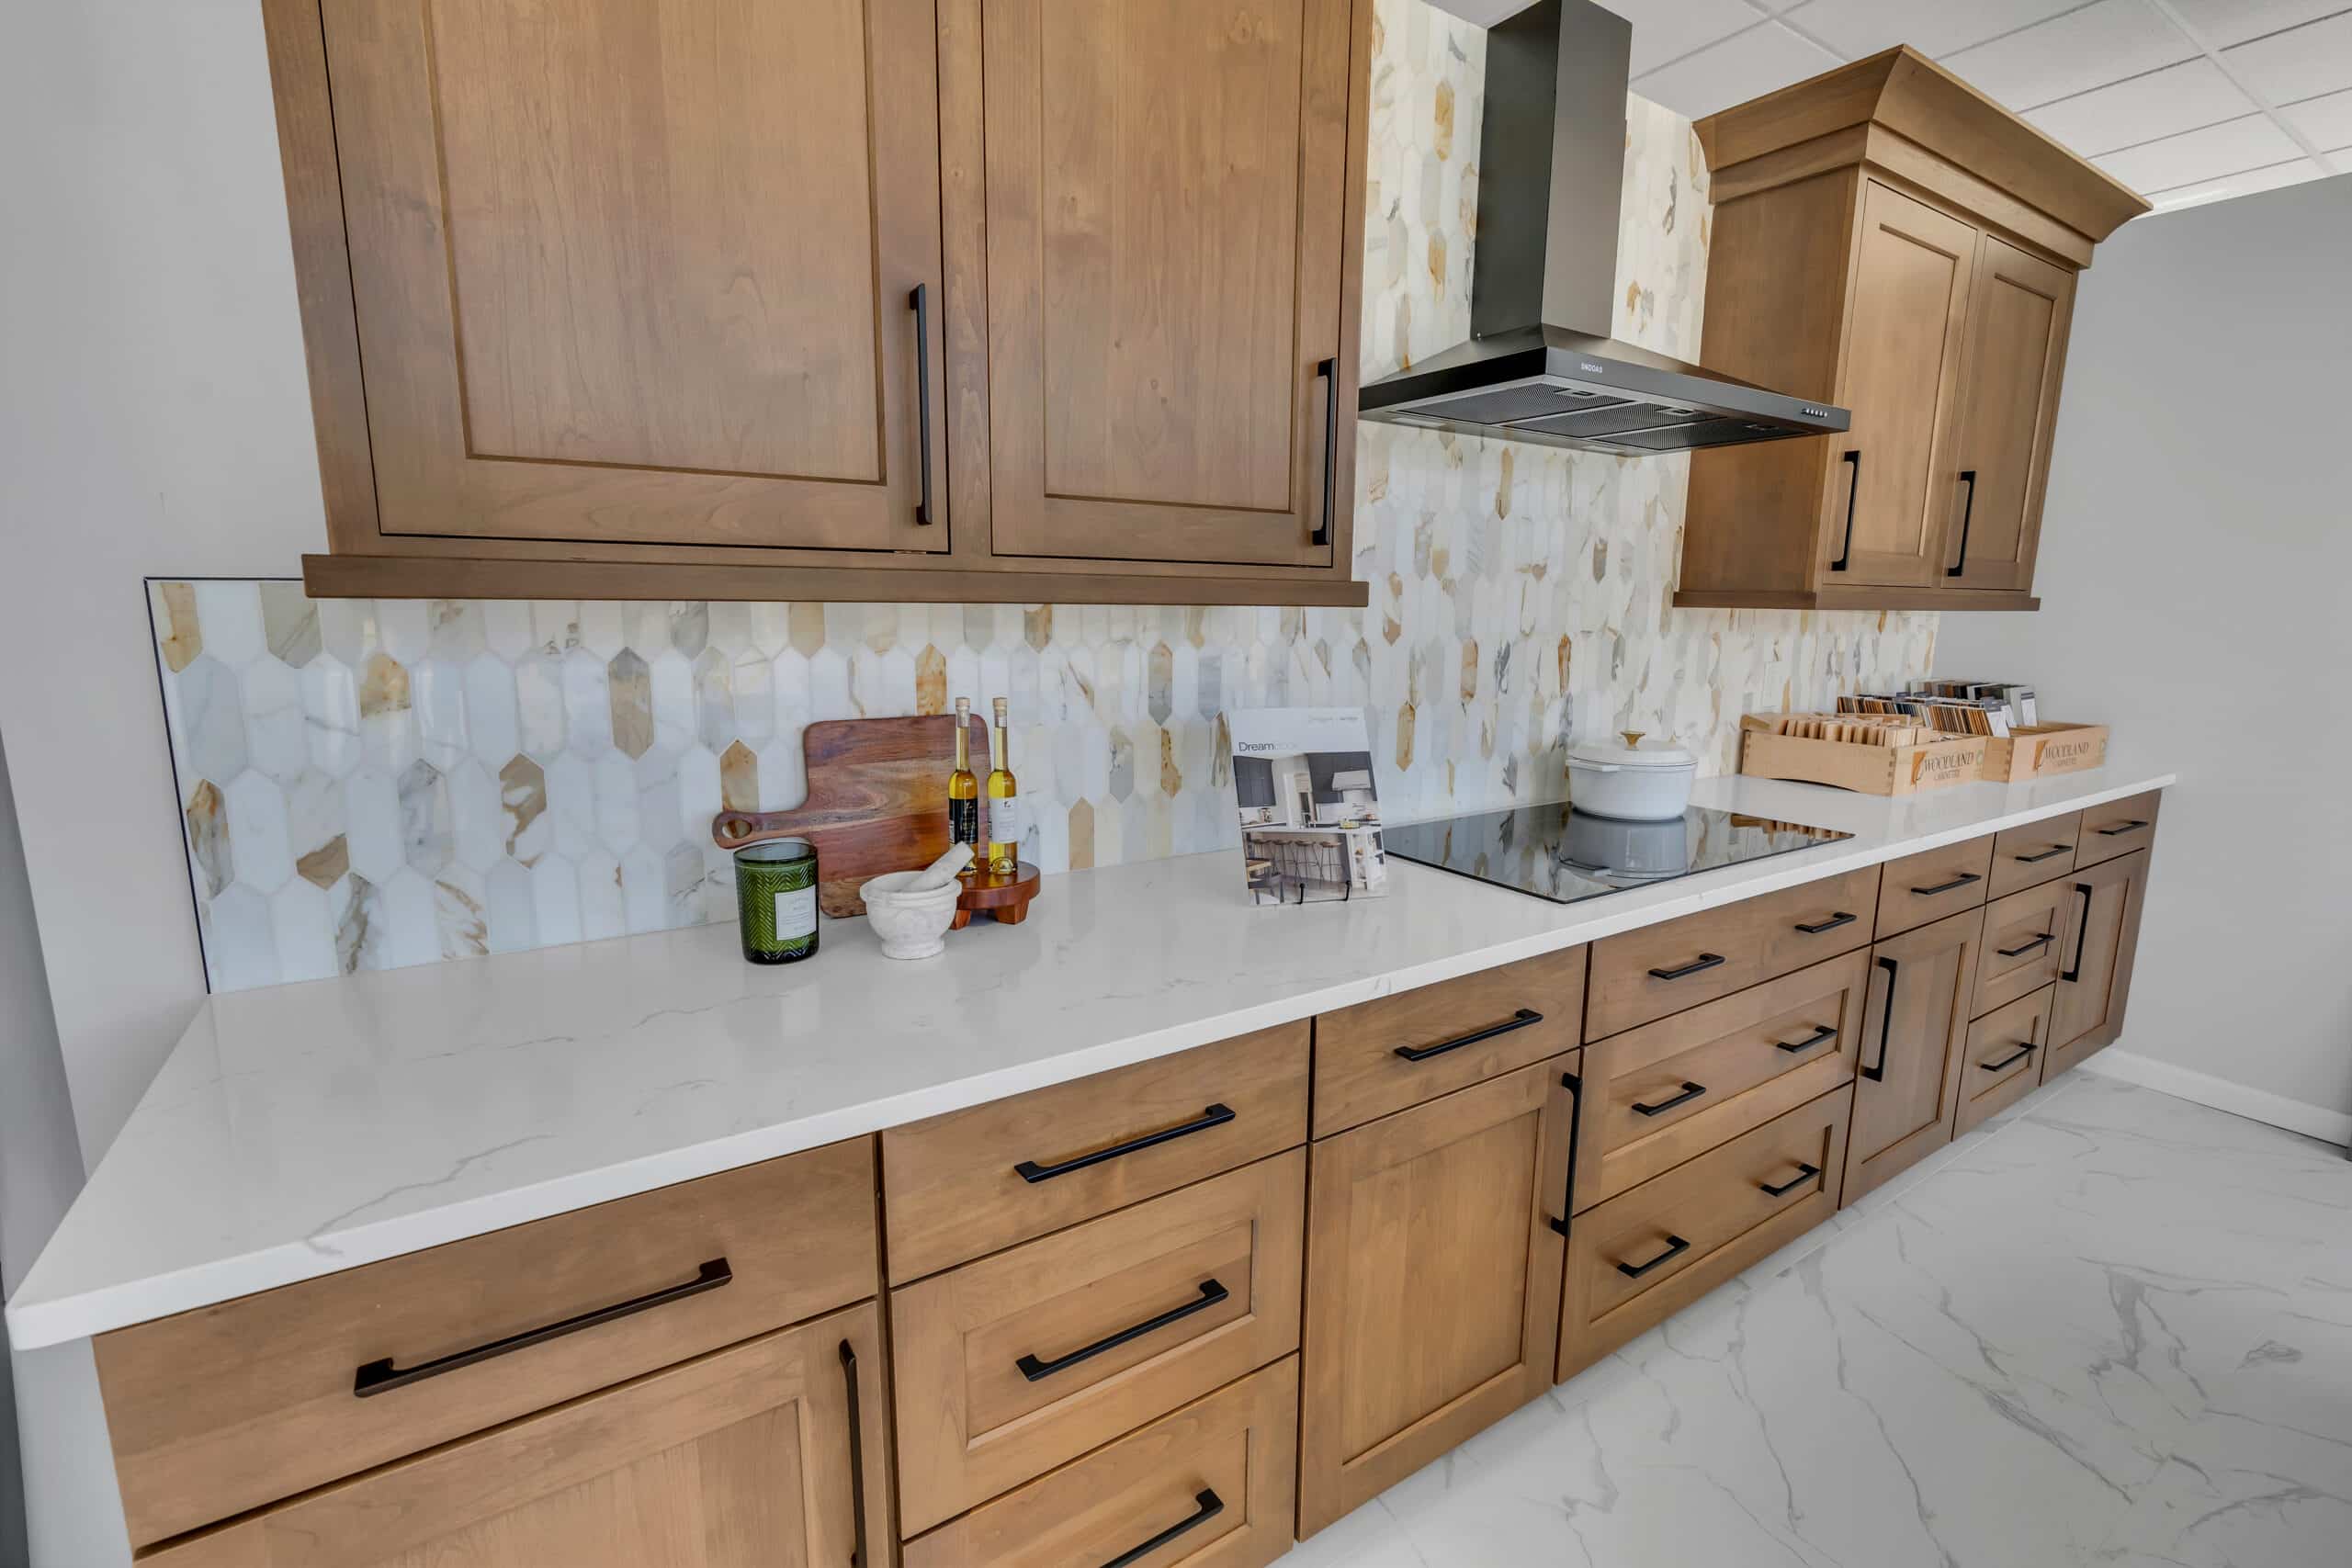 Brown kitchen cabinet with white countertop kitchen design